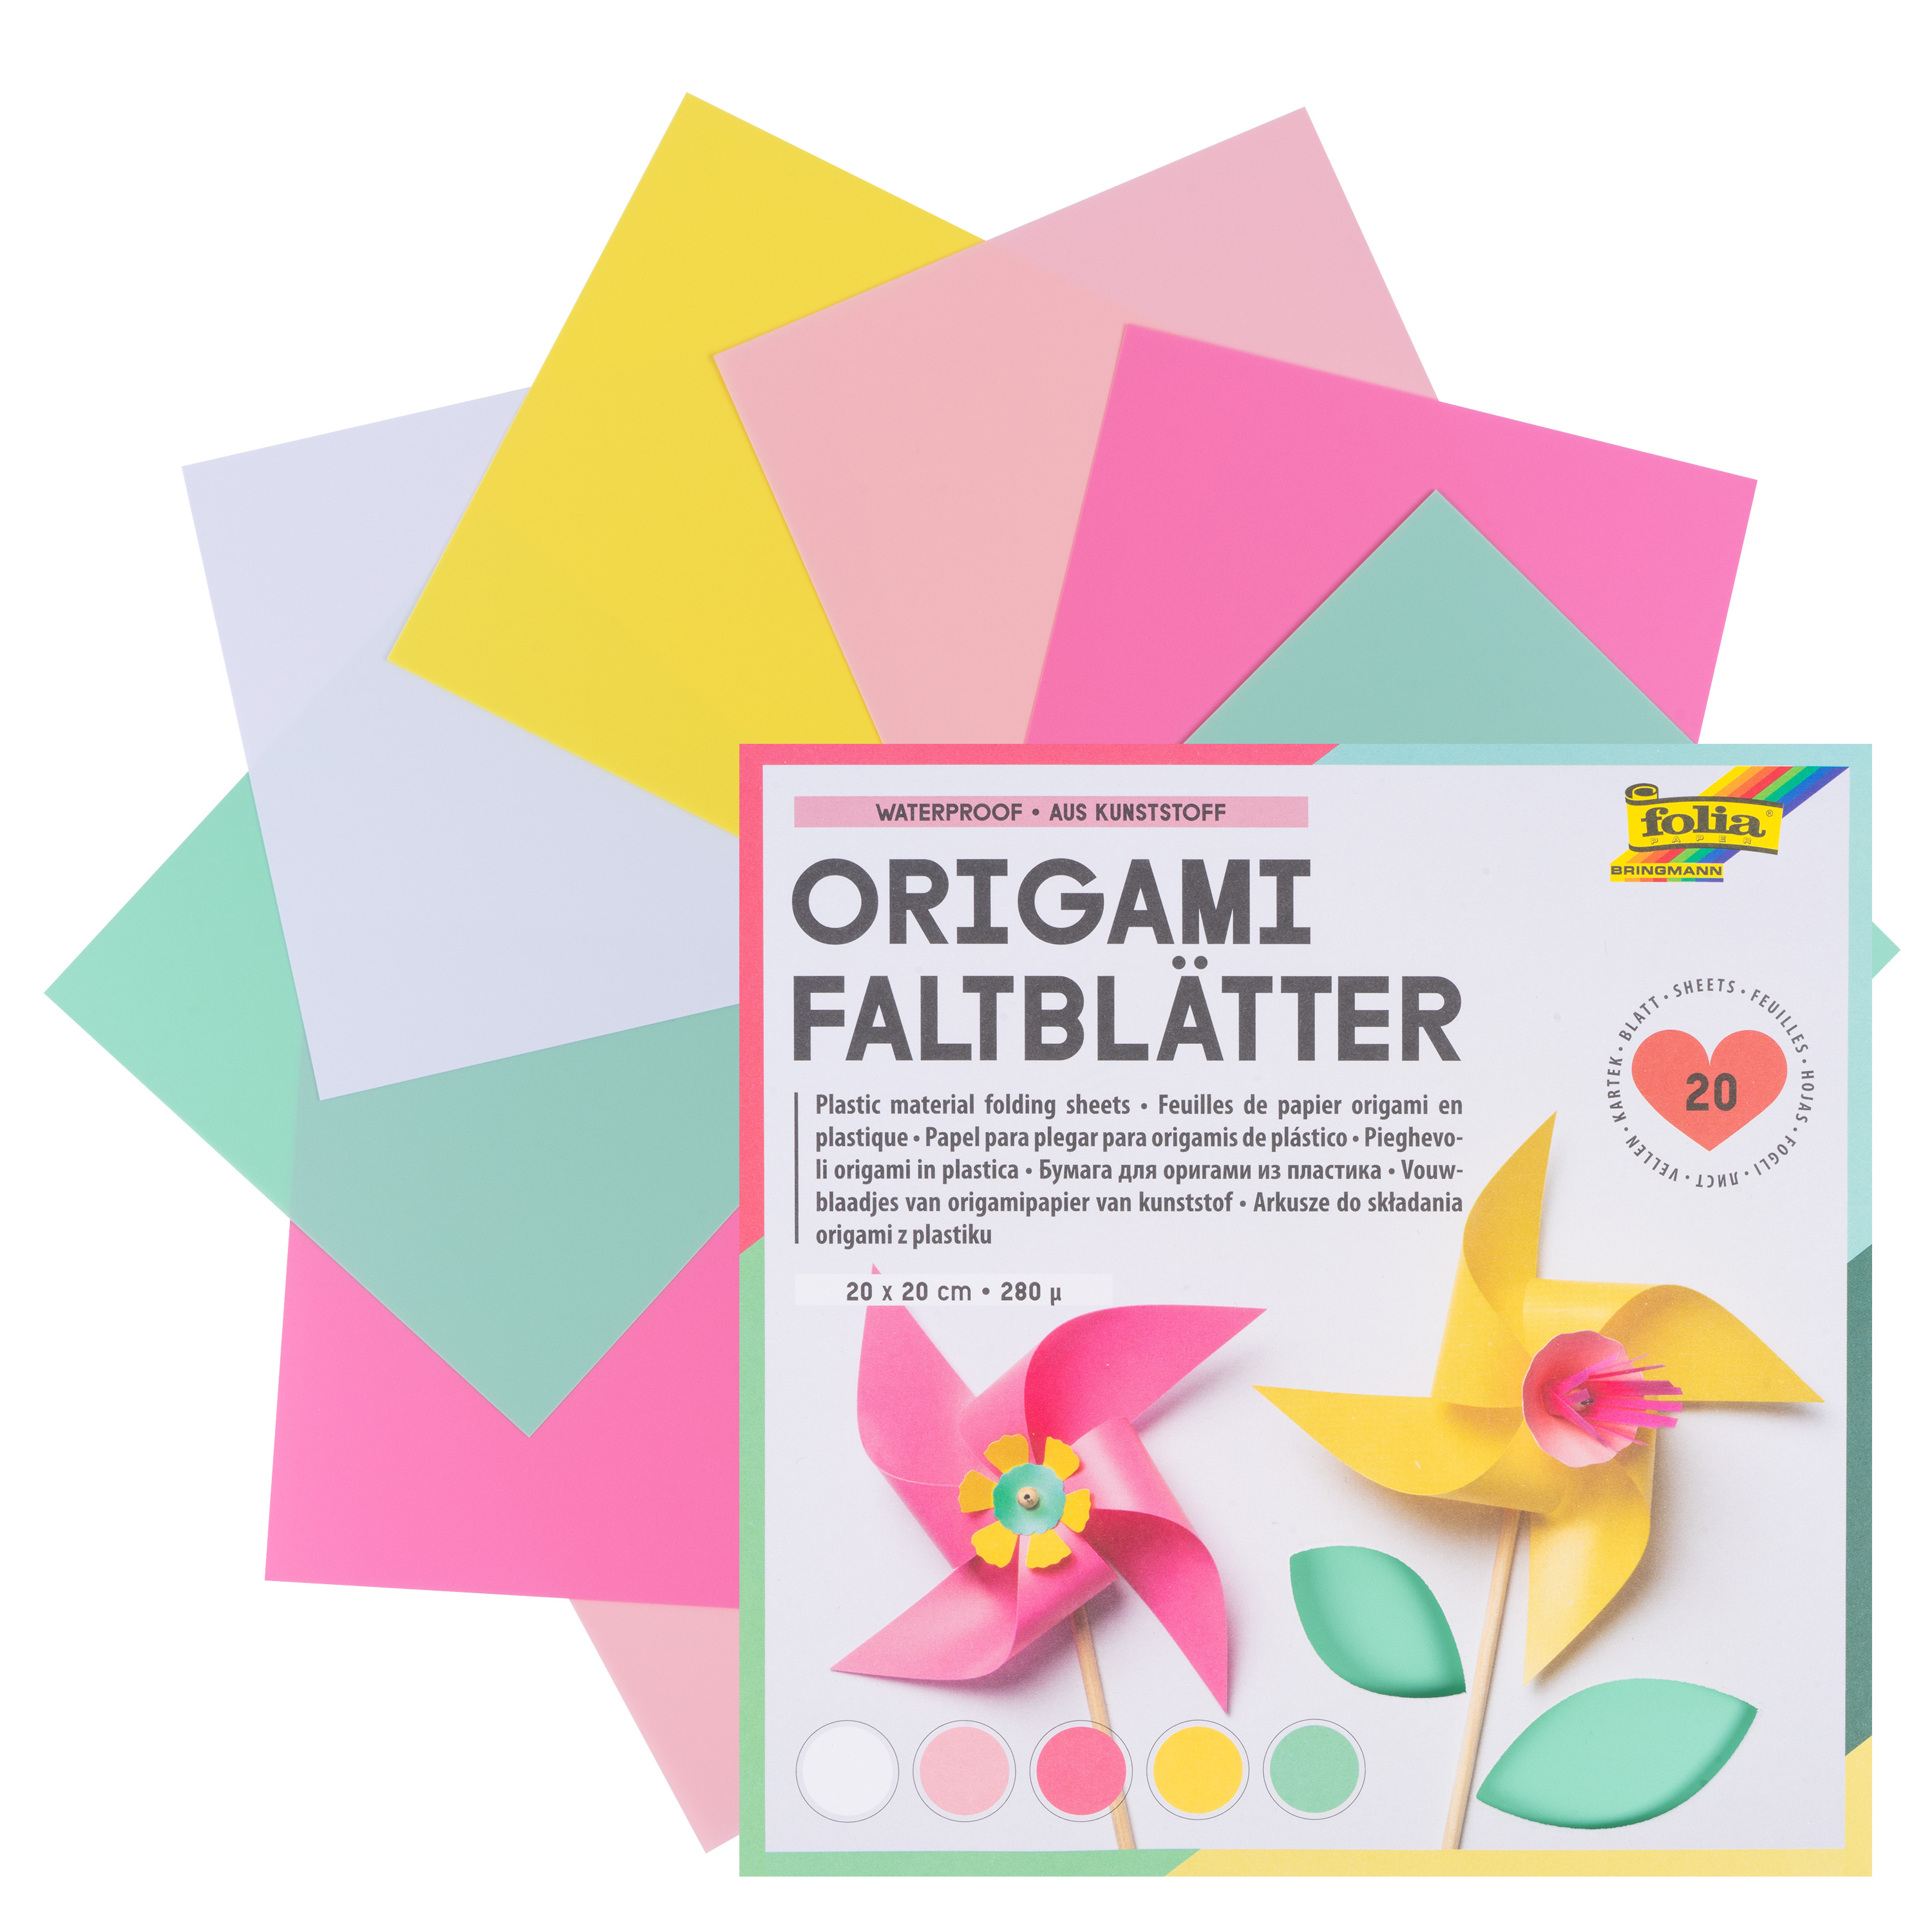 Origami Faltblätter aus Kunststoff 'Pastell', 20 x 20 cm